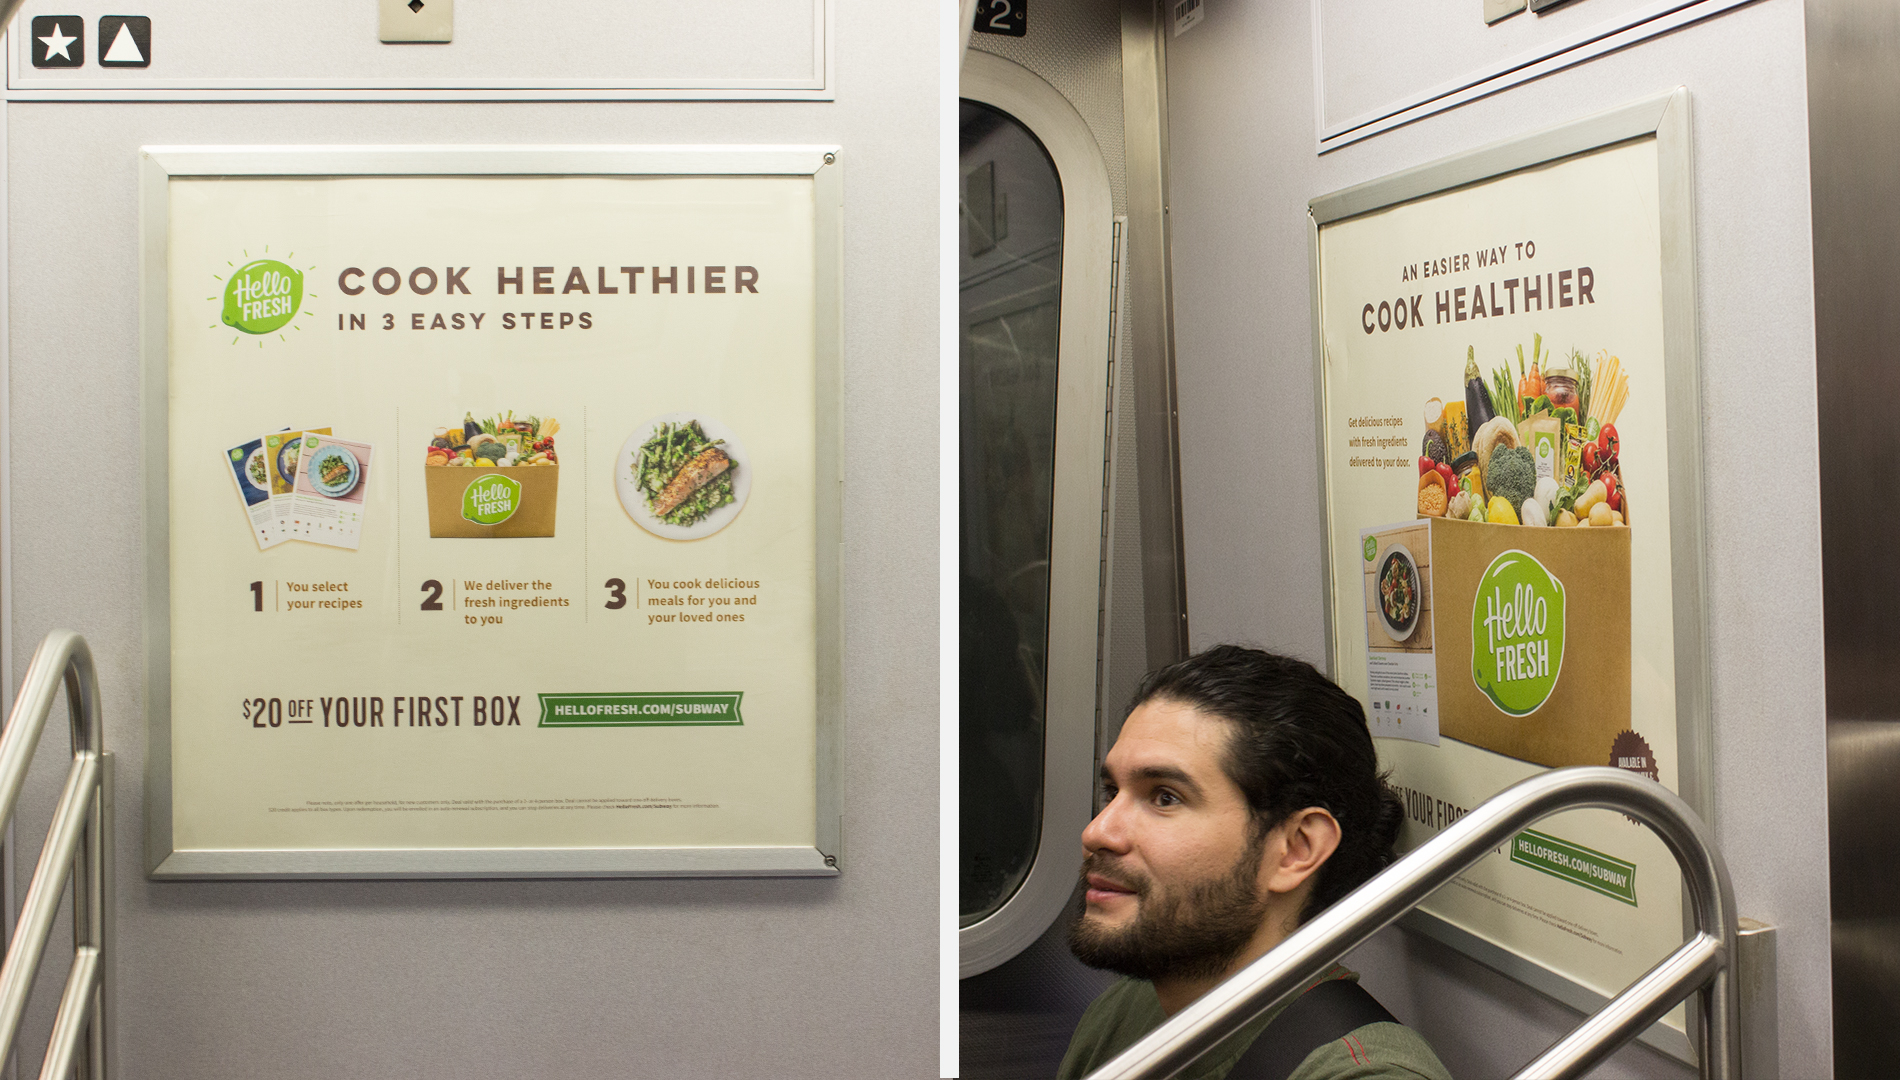 HelloFresh transit campaign on NYC subway